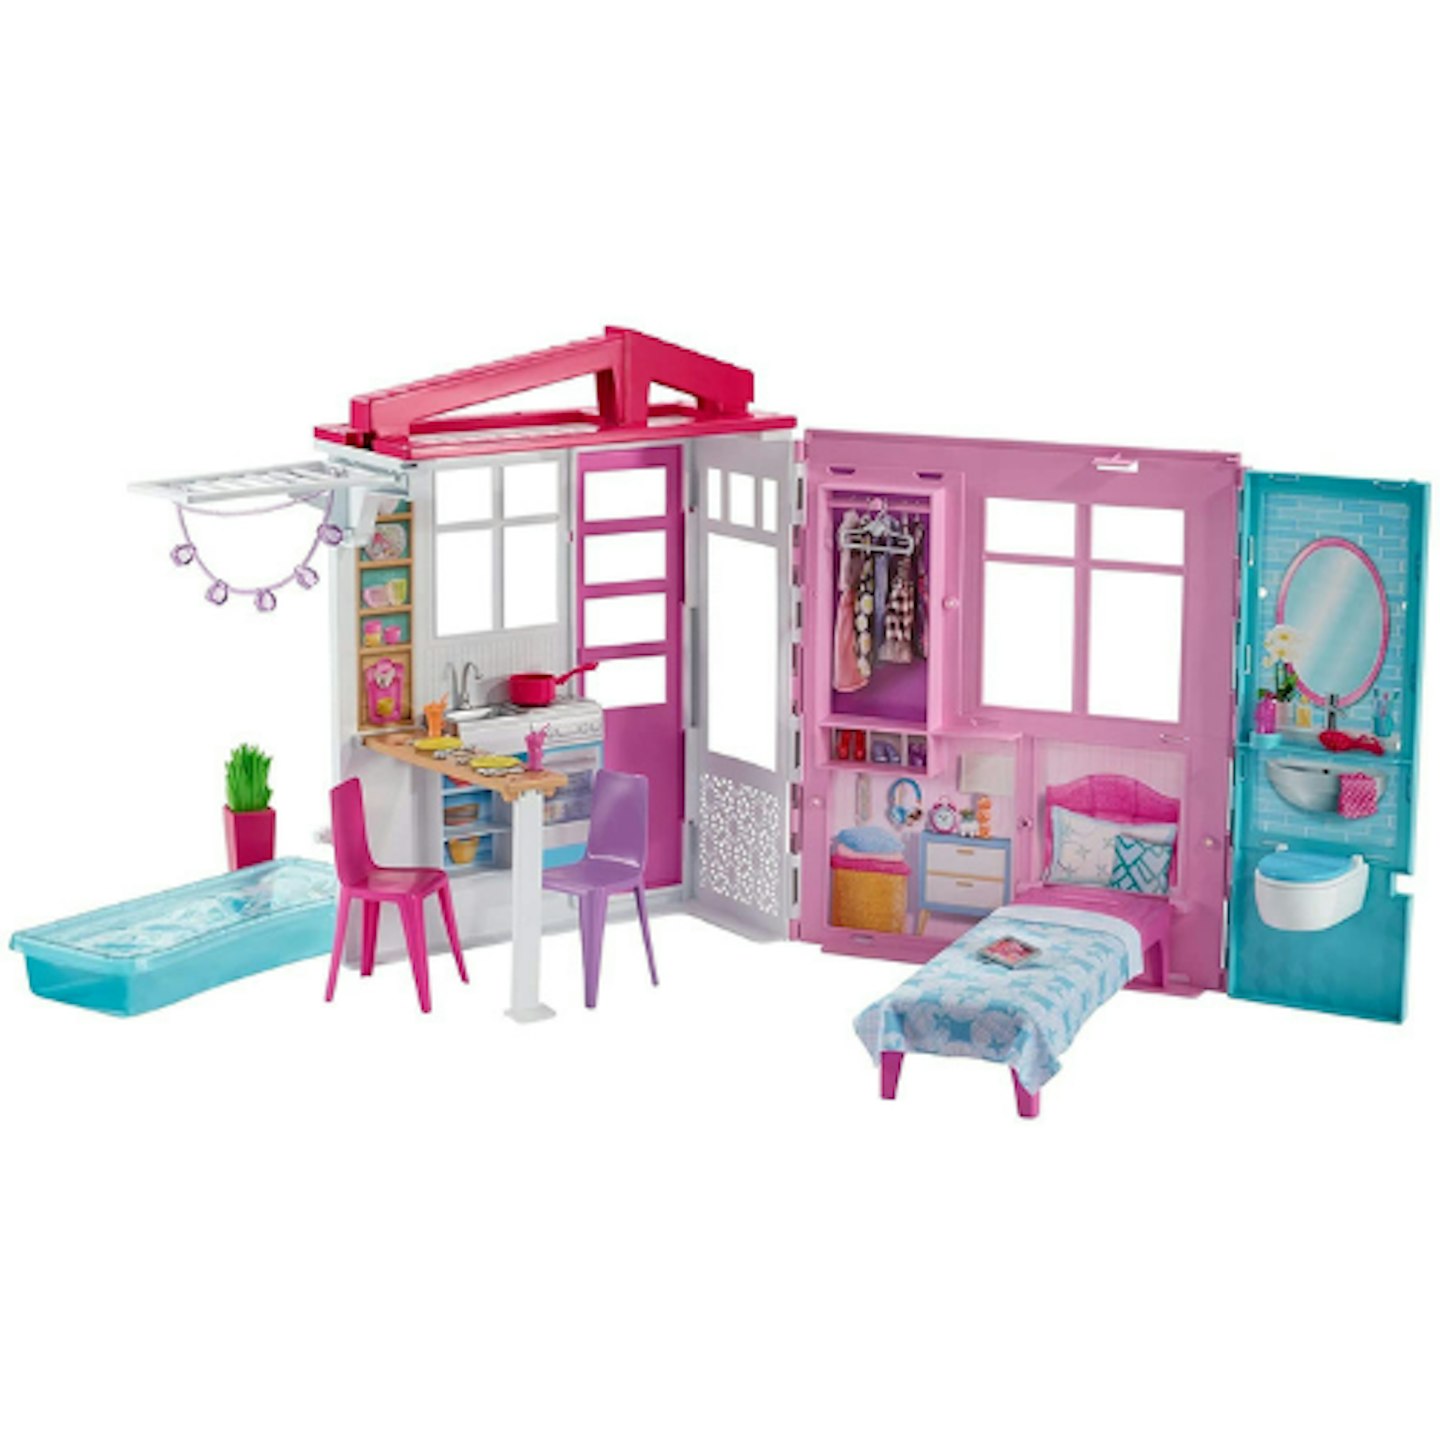 Barbie FXG54 Dollhouse, Portable 1-Story Playset